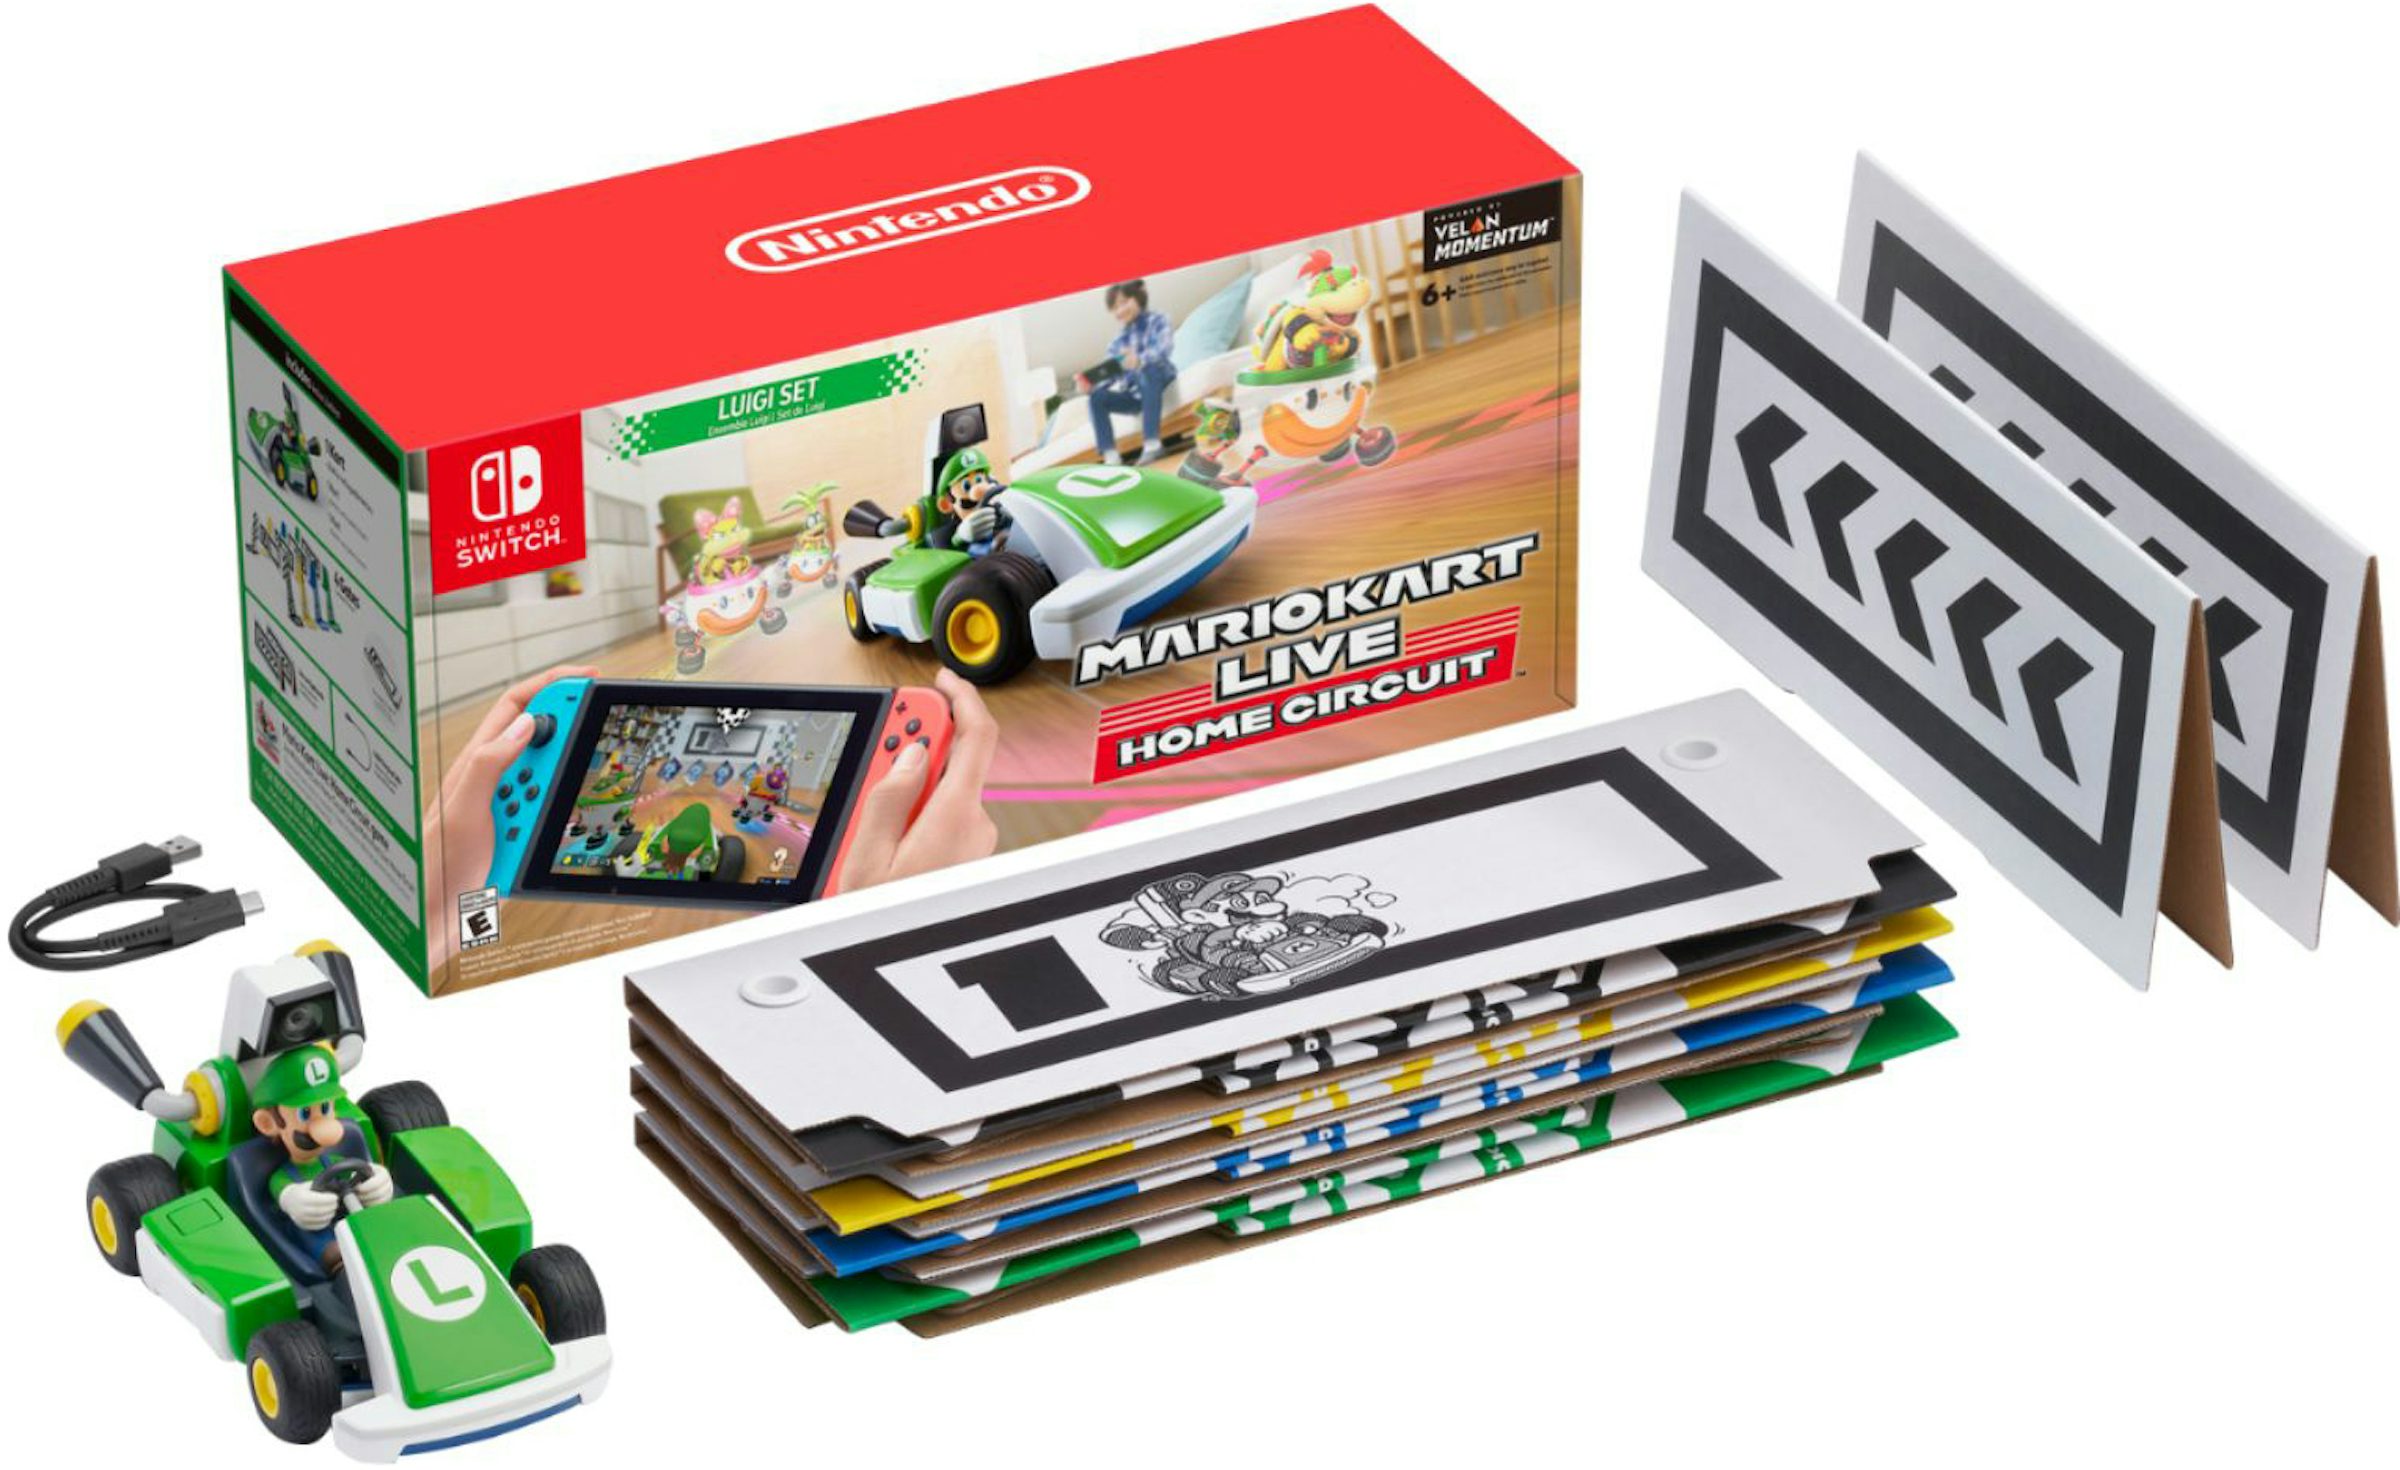 https://images.stockx.com/images/Nintendo-Mario-Kart-Live-Home-Circuit-HACRRMBAA-Luigi-Set.jpg?fit=fill&bg=FFFFFF&w=1200&h=857&fm=jpg&auto=compress&dpr=2&trim=color&updated_at=1605629566&q=60